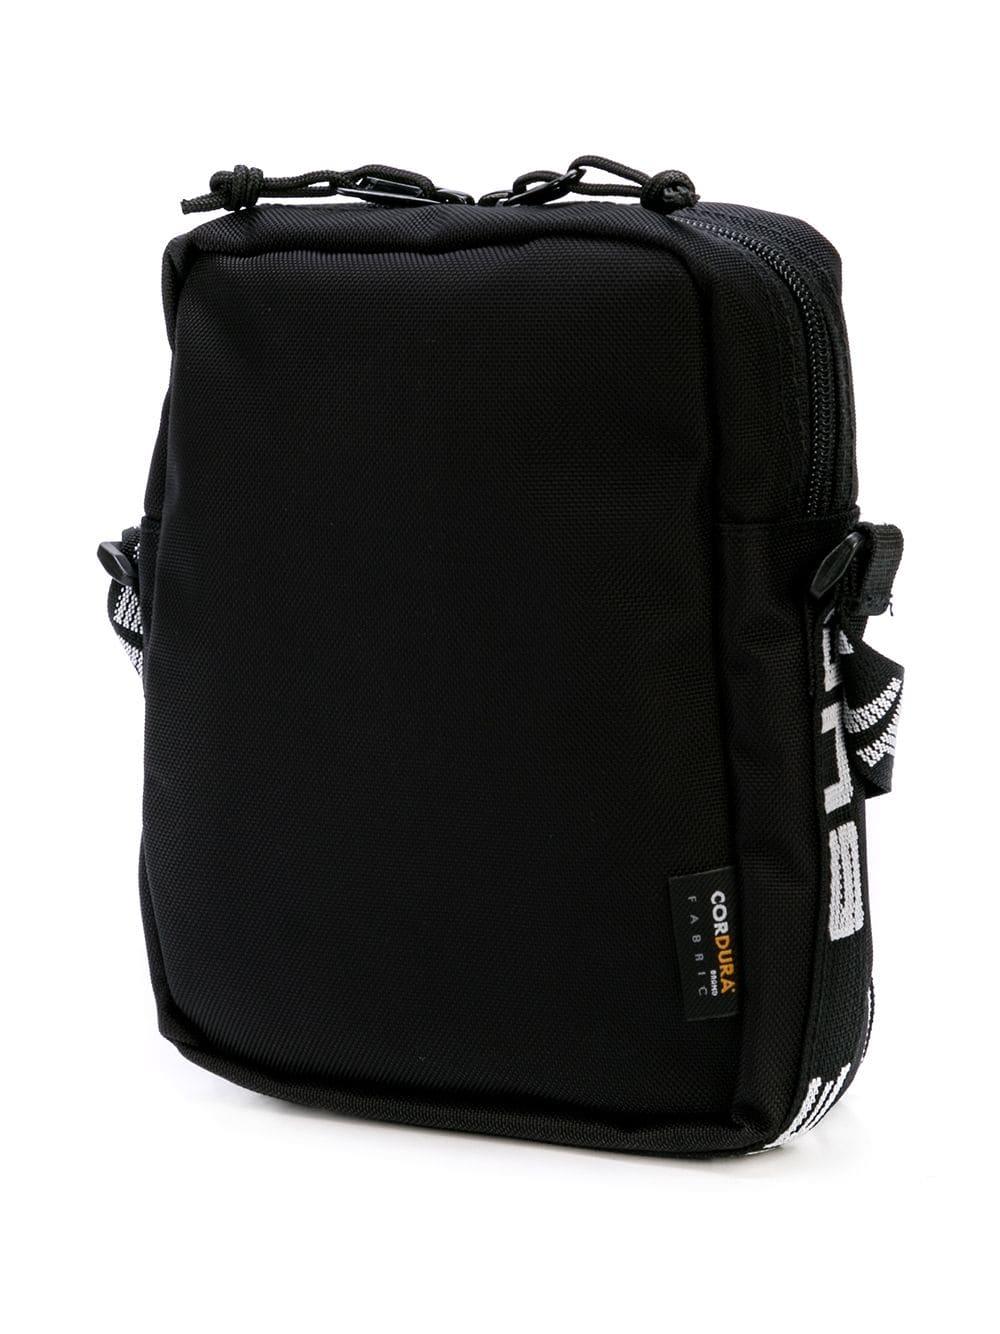 Supreme Shoulder Bag Black Brand New for Sale in Queens, NY - OfferUp